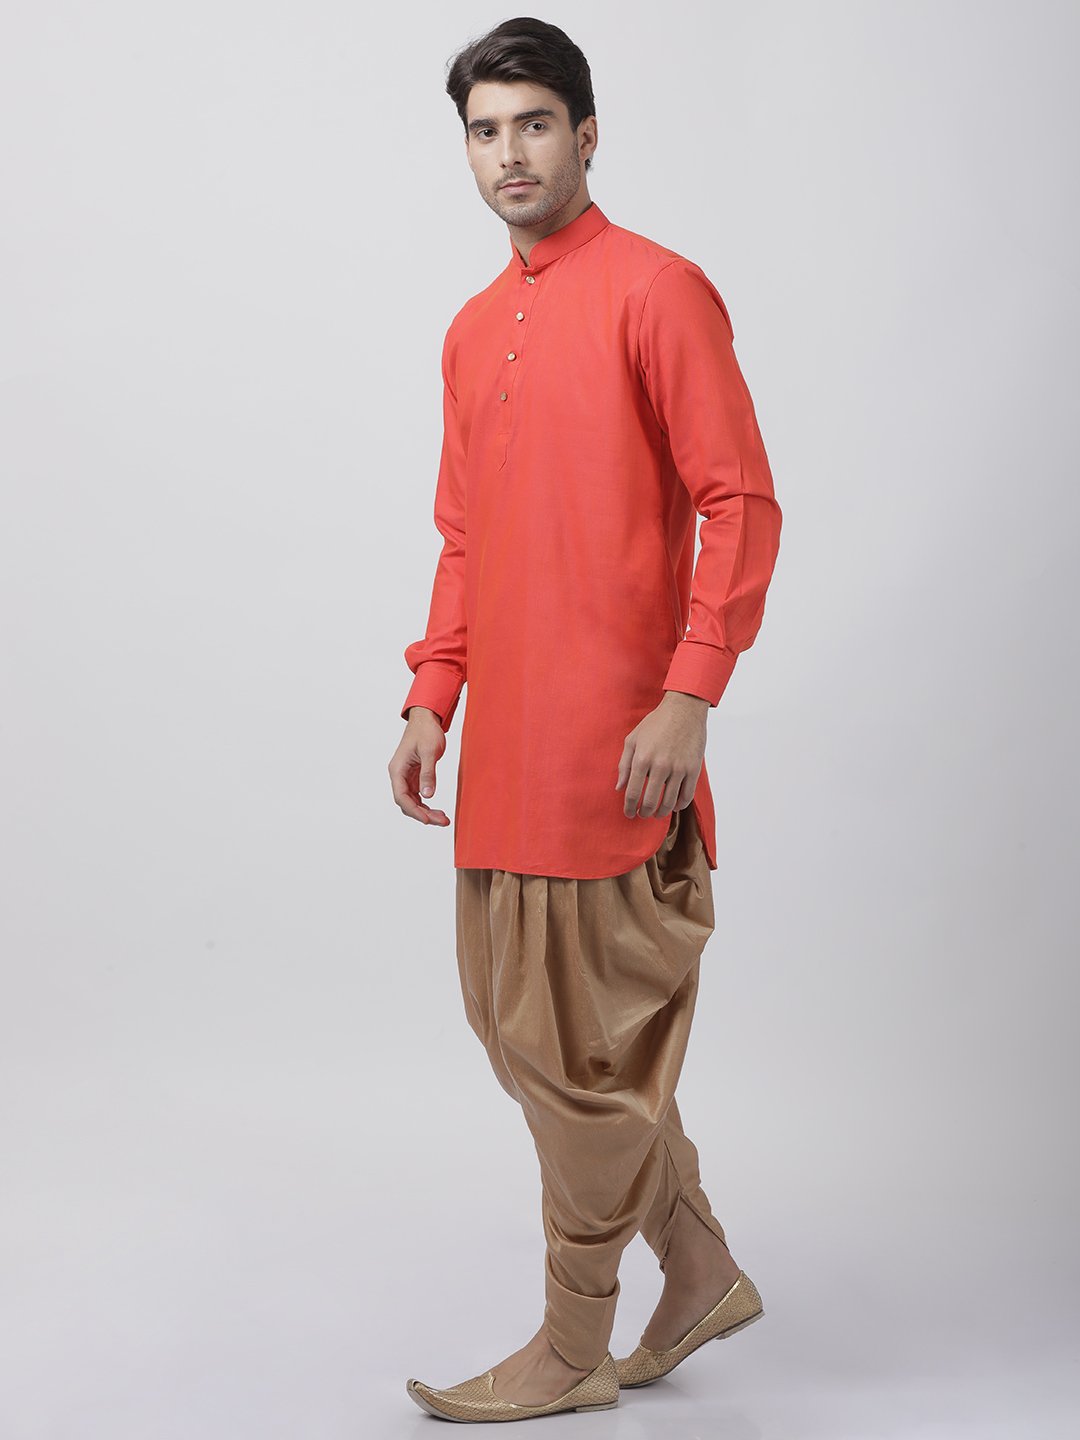 Men's Orange Cotton Kurta and Dhoti Pant Set